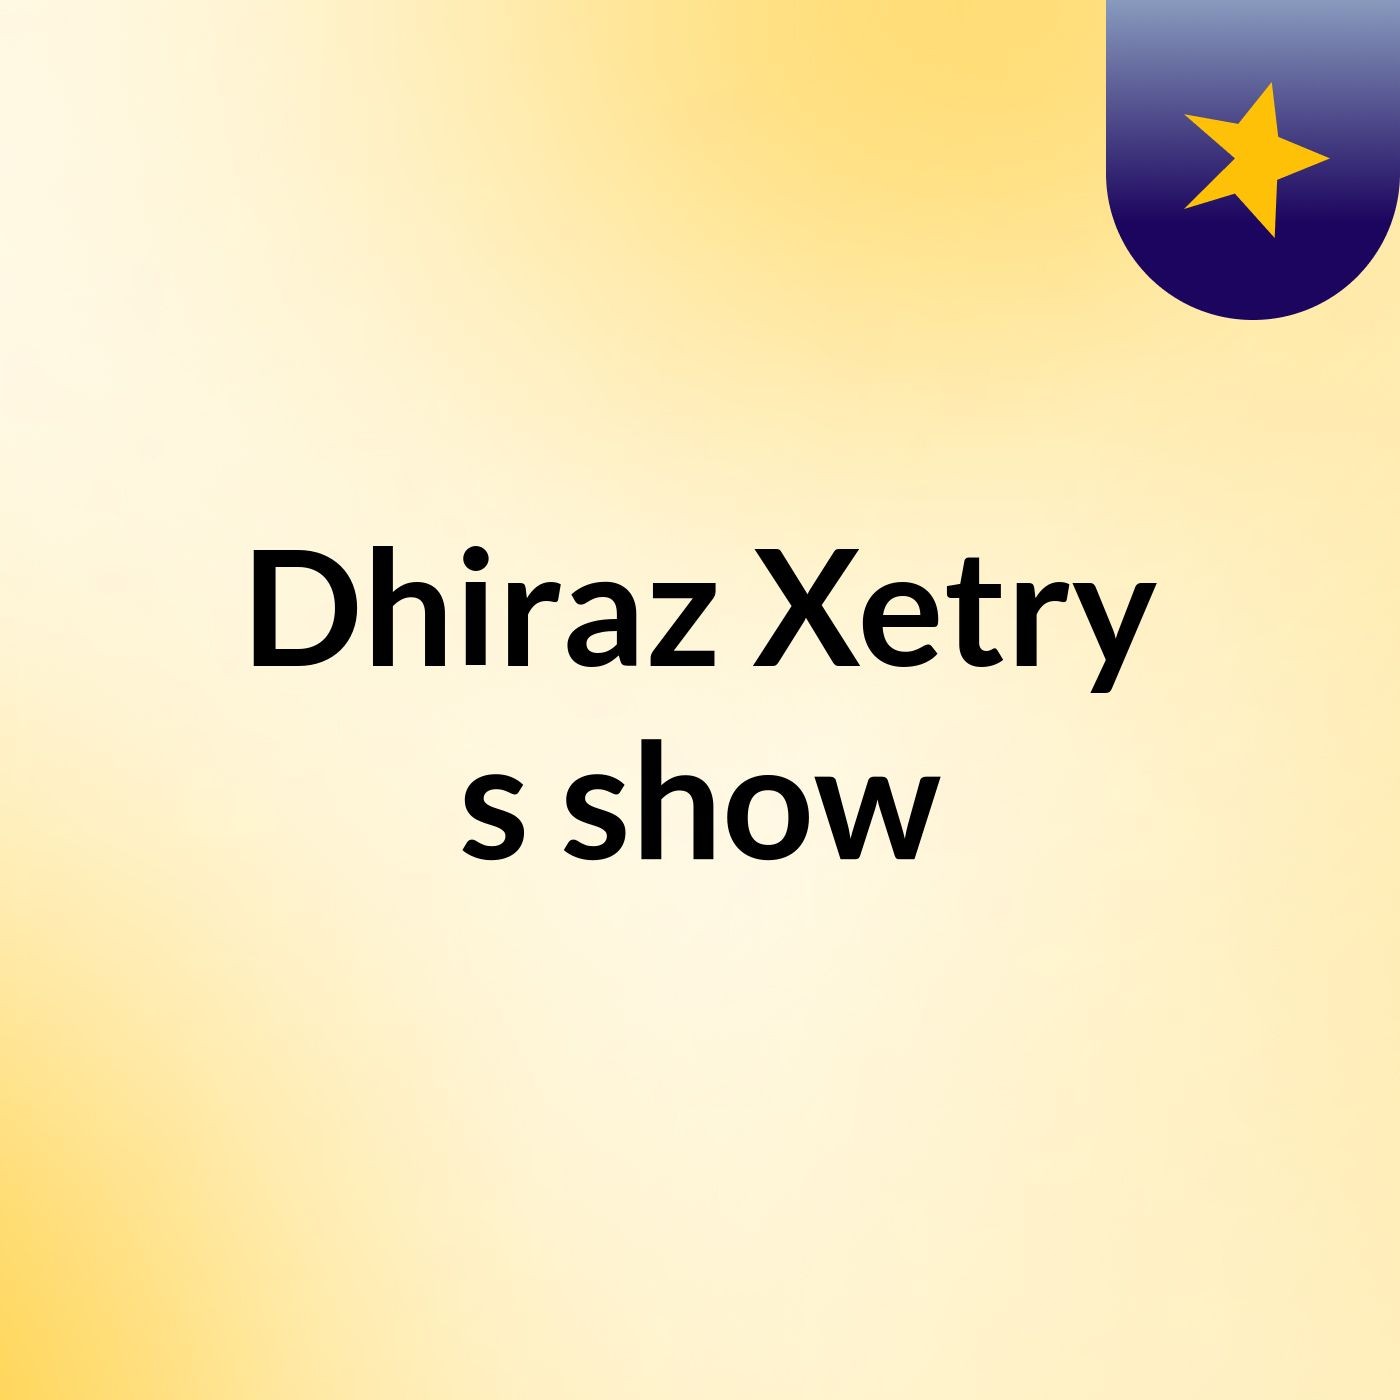 Dhiraz Xetry's show